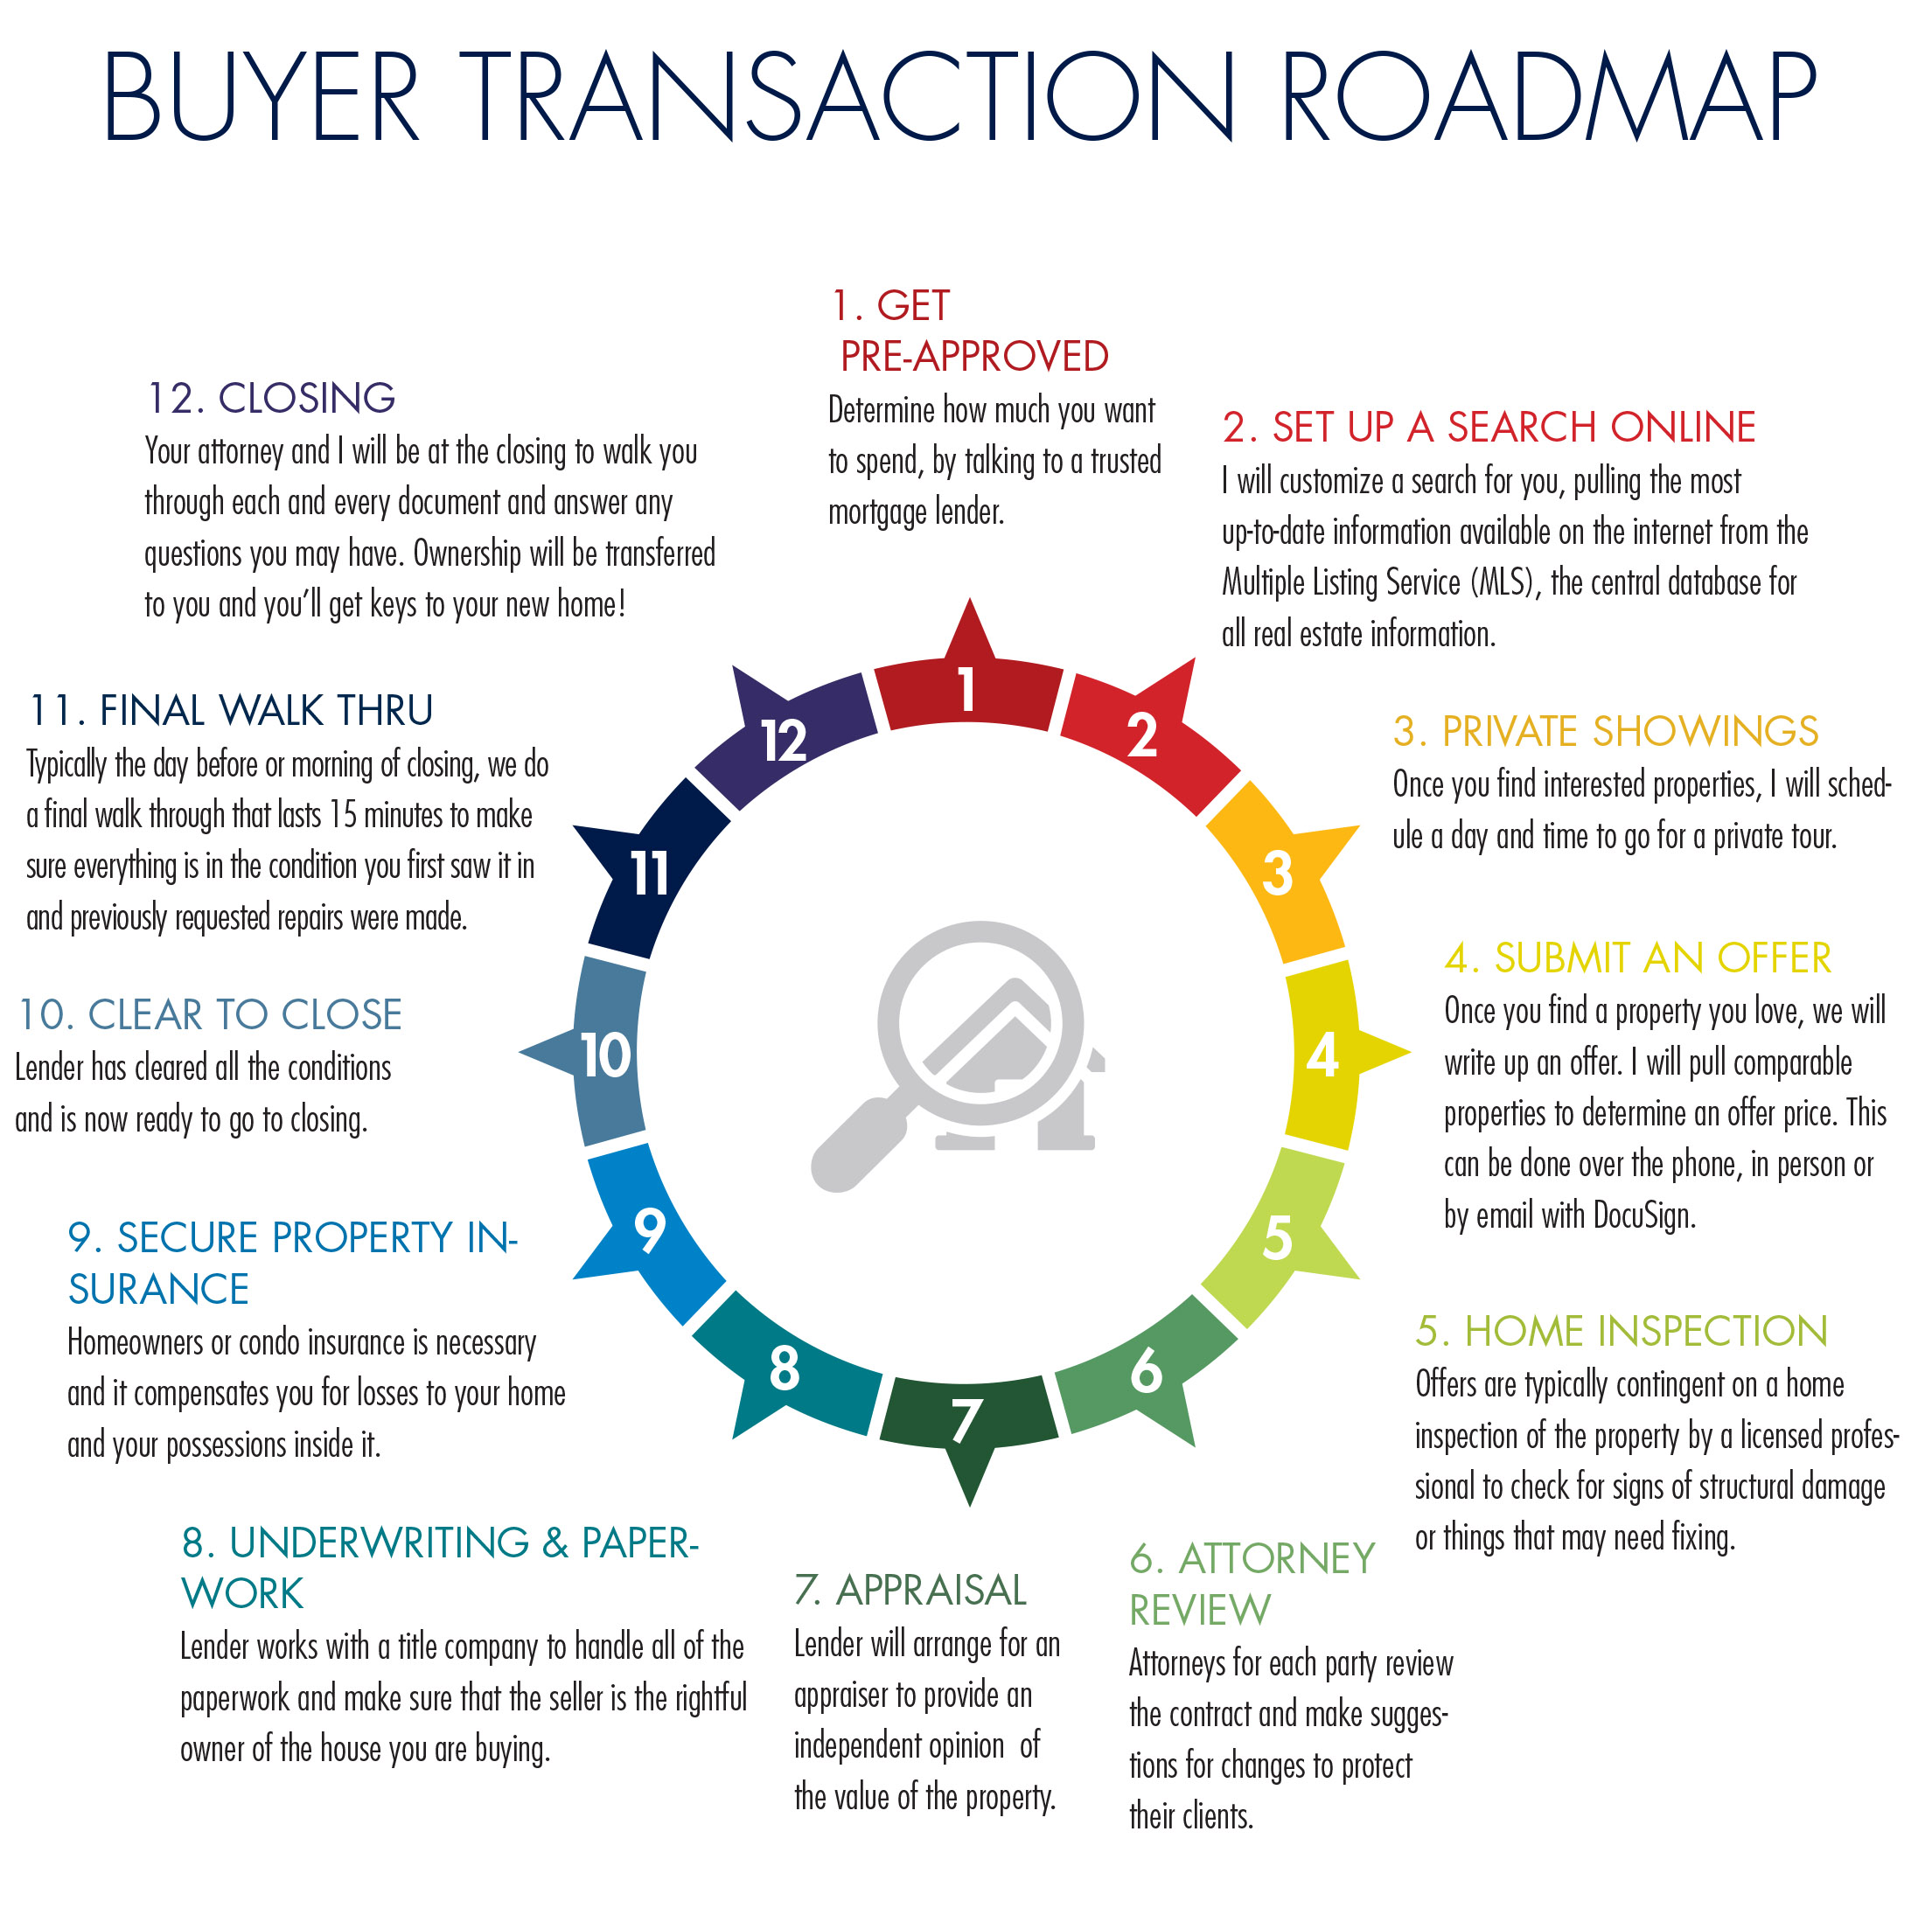 BuyerTransaction Roadmap 2